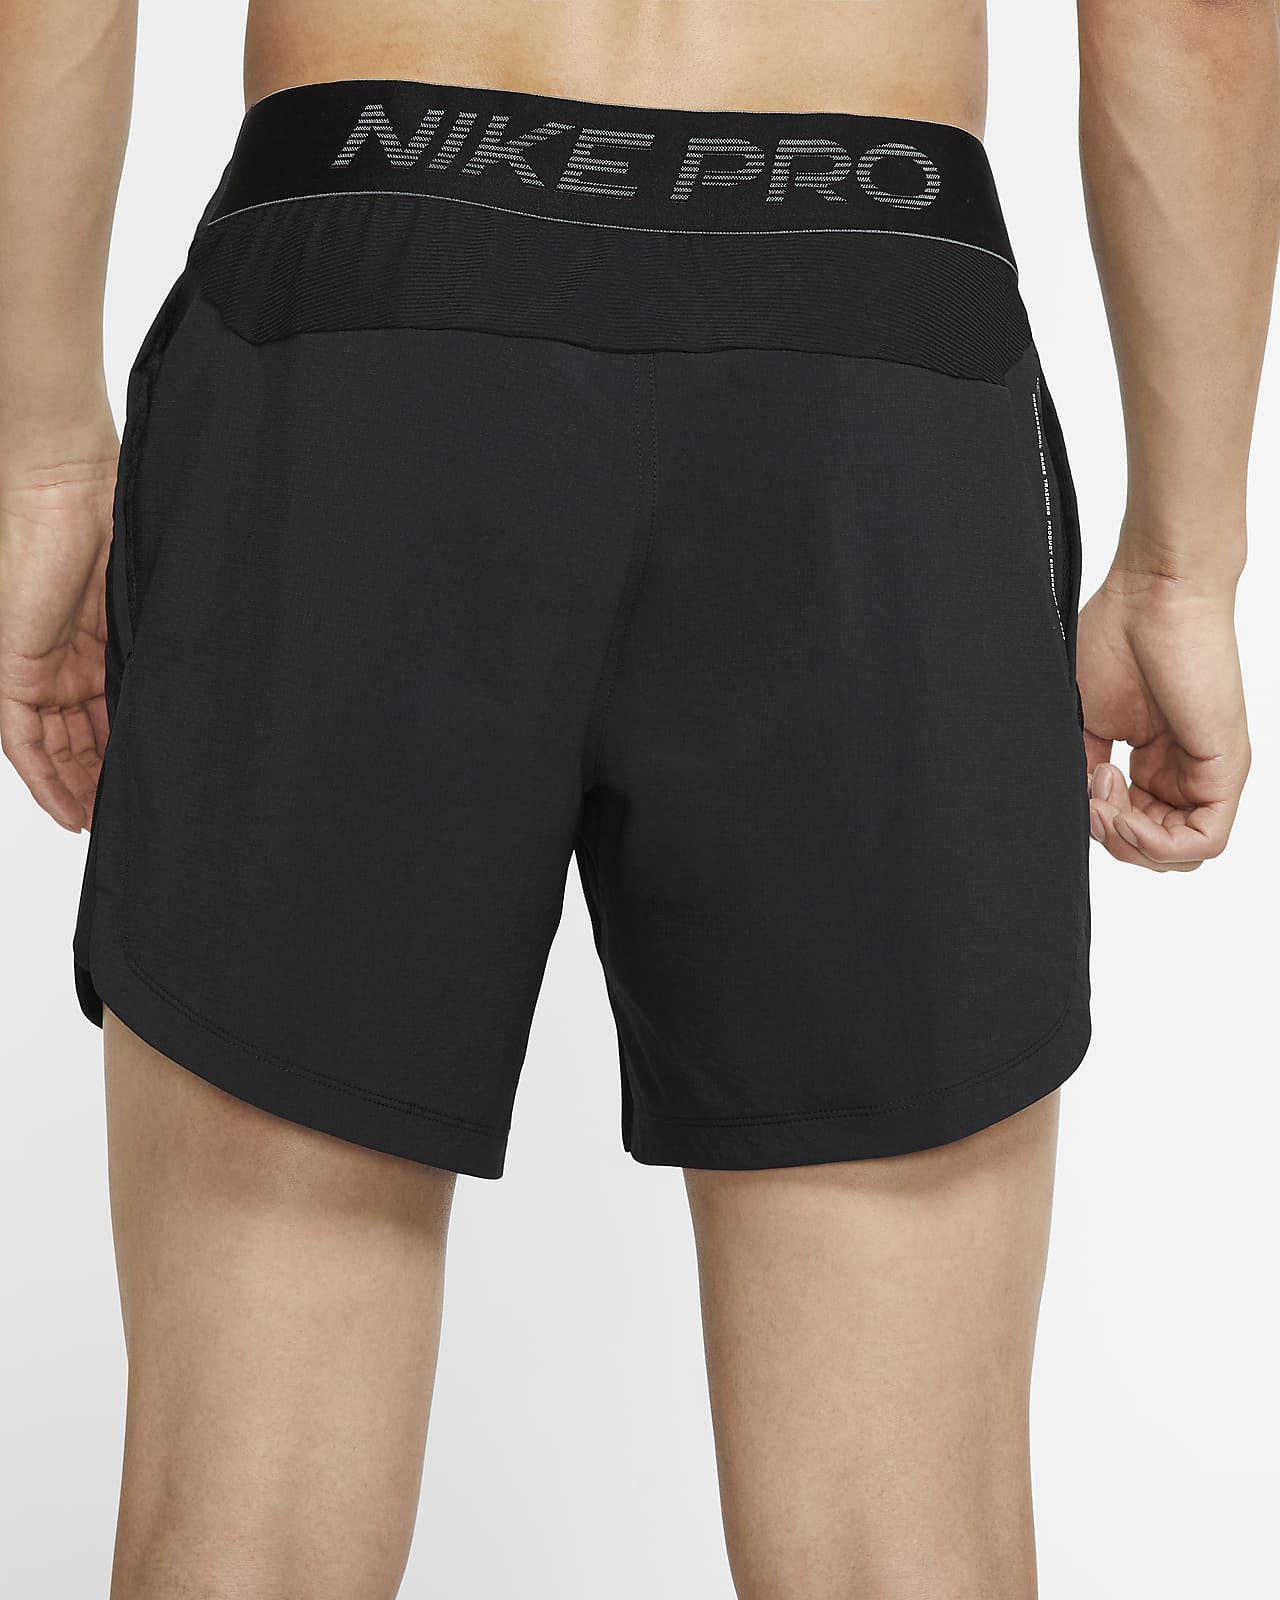 nike men's hybrid shorts